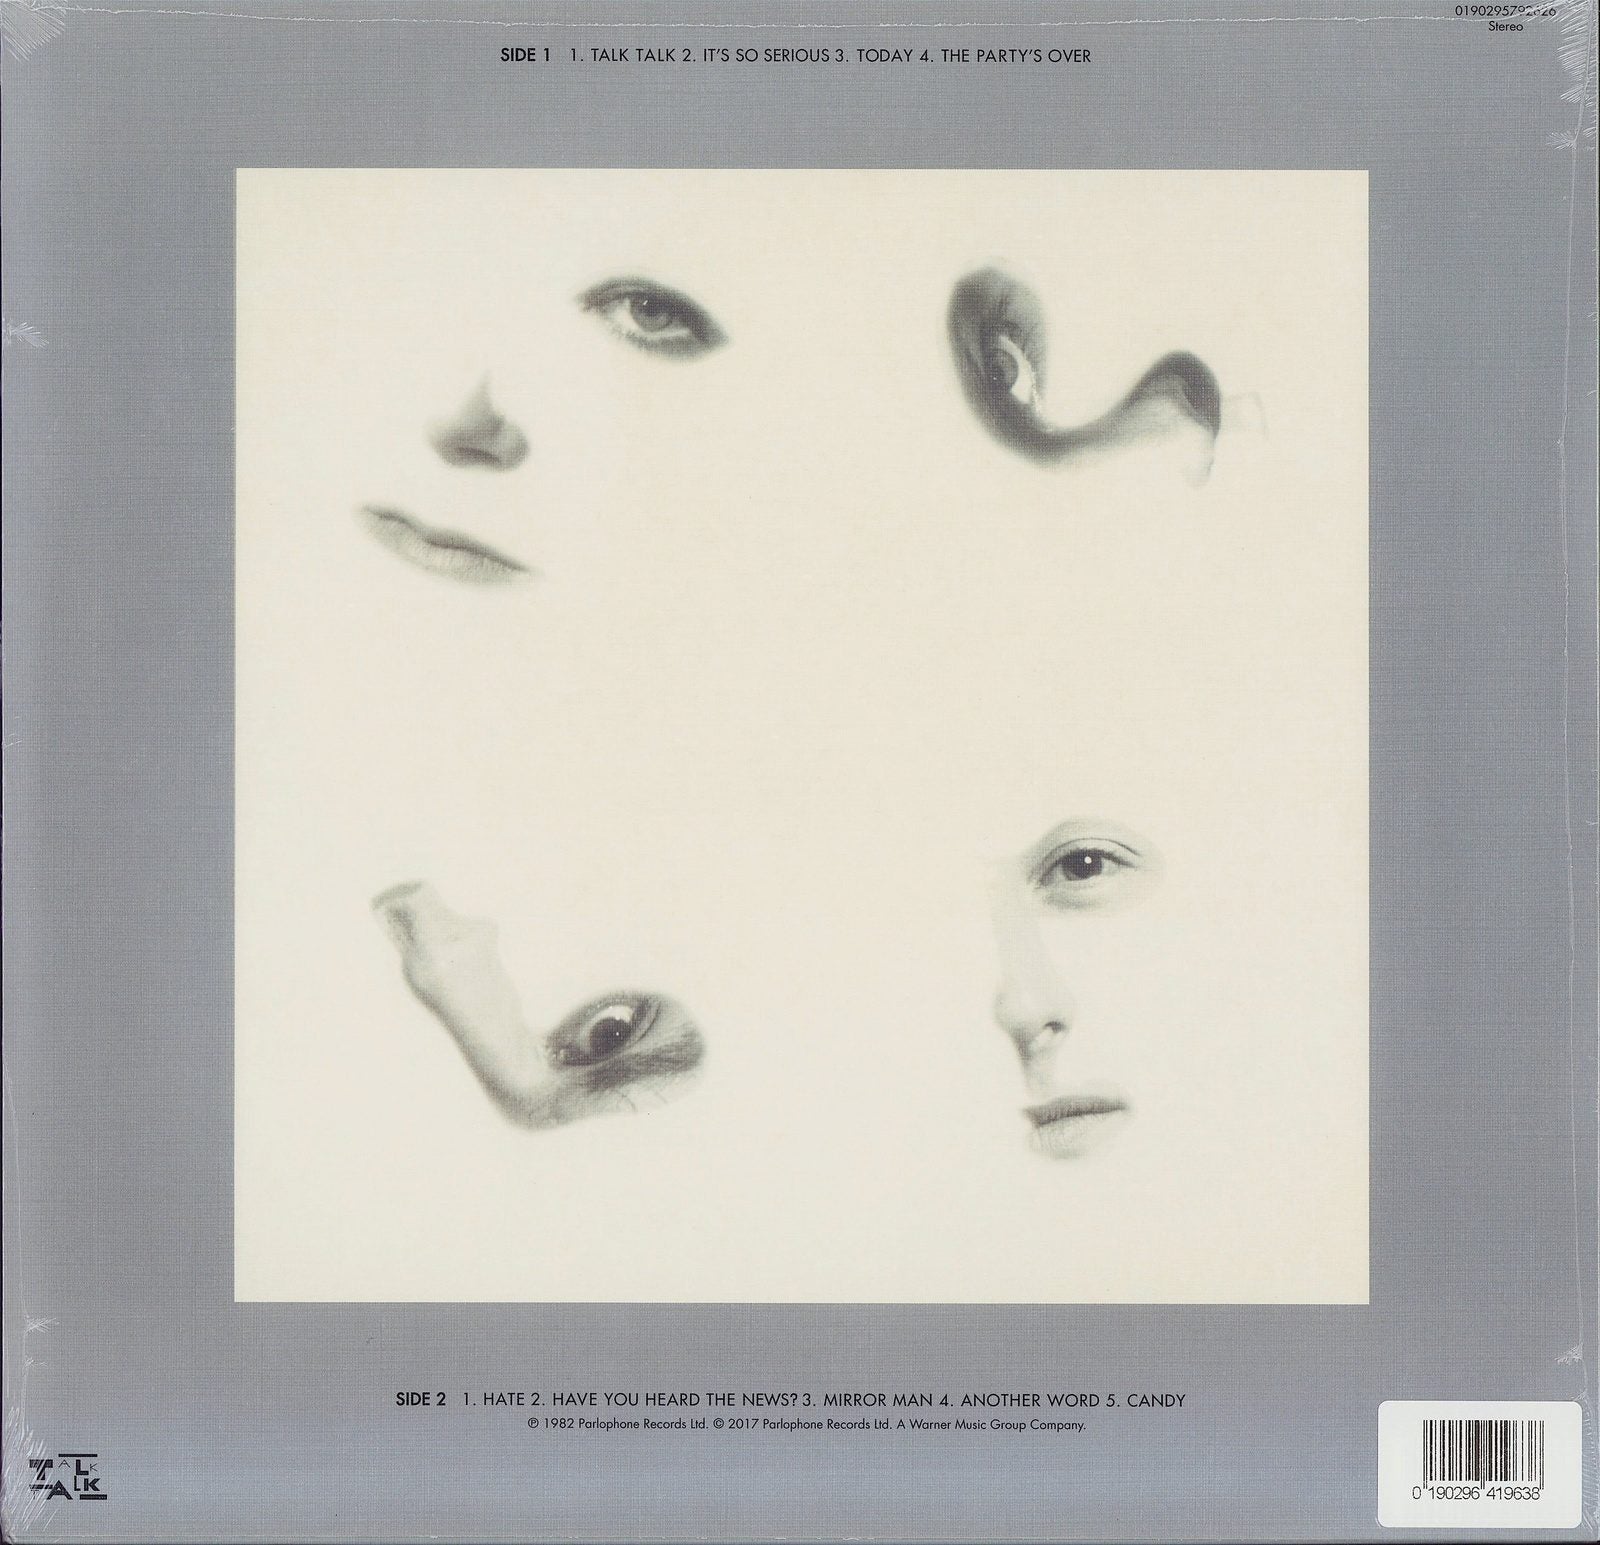 Talk Talk ‎– The Party's Over - 40th Anniversary Edition White Vinyl LP